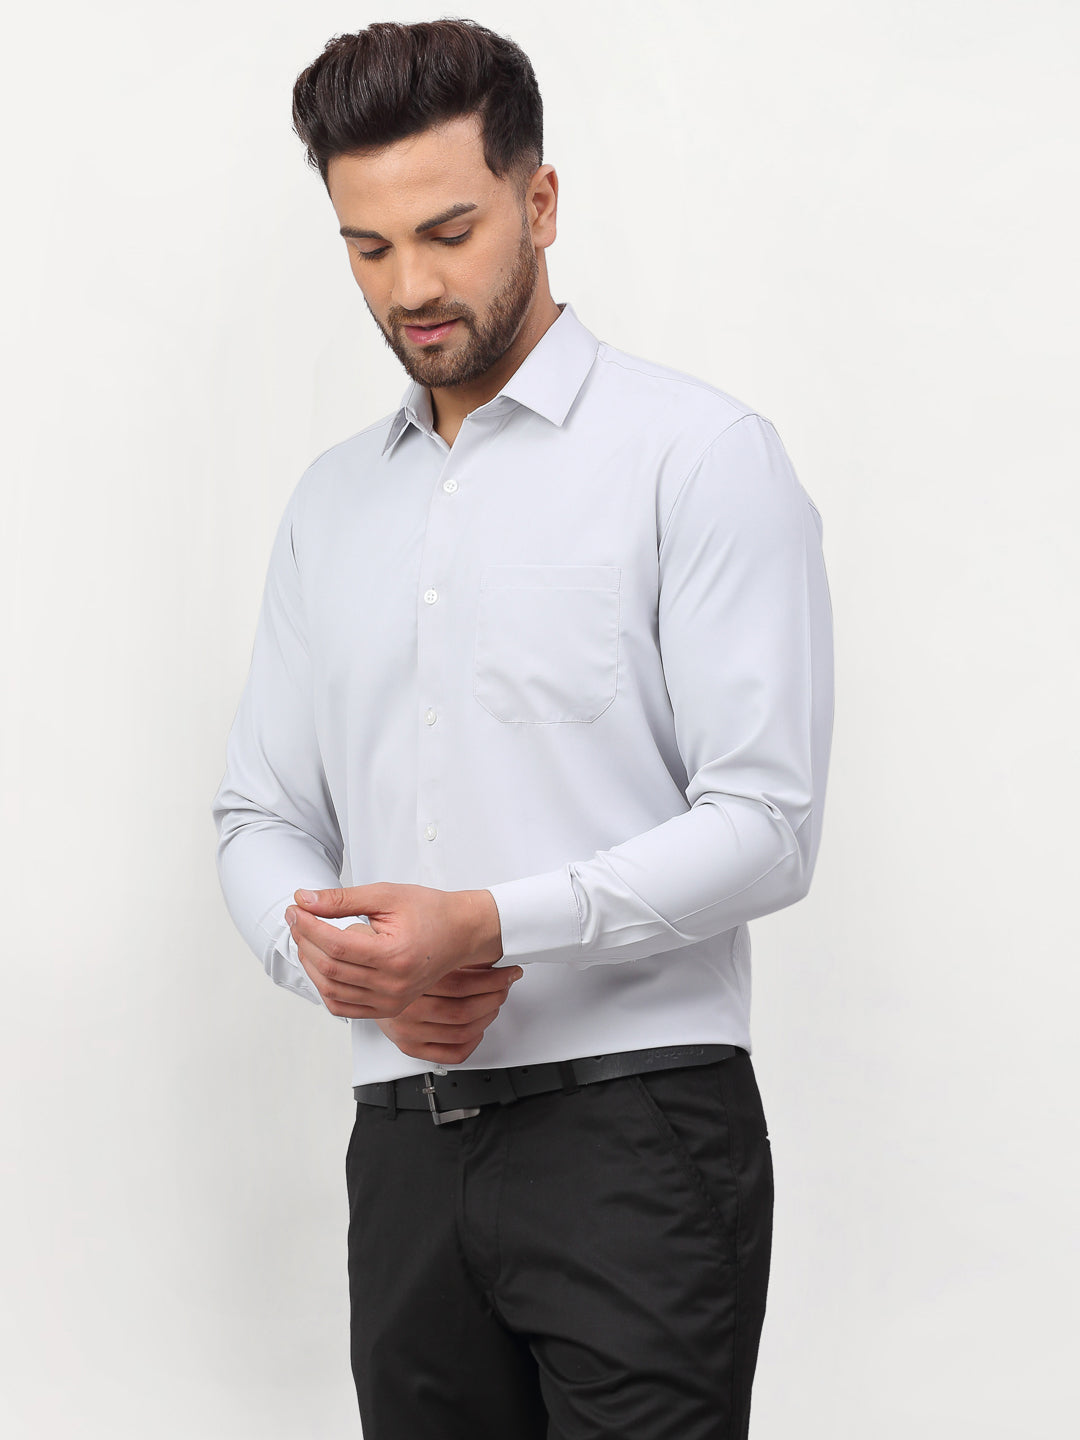 Men's Silver Solid Formal Shirts ( SF 777Steel-Grey ) - Jainish